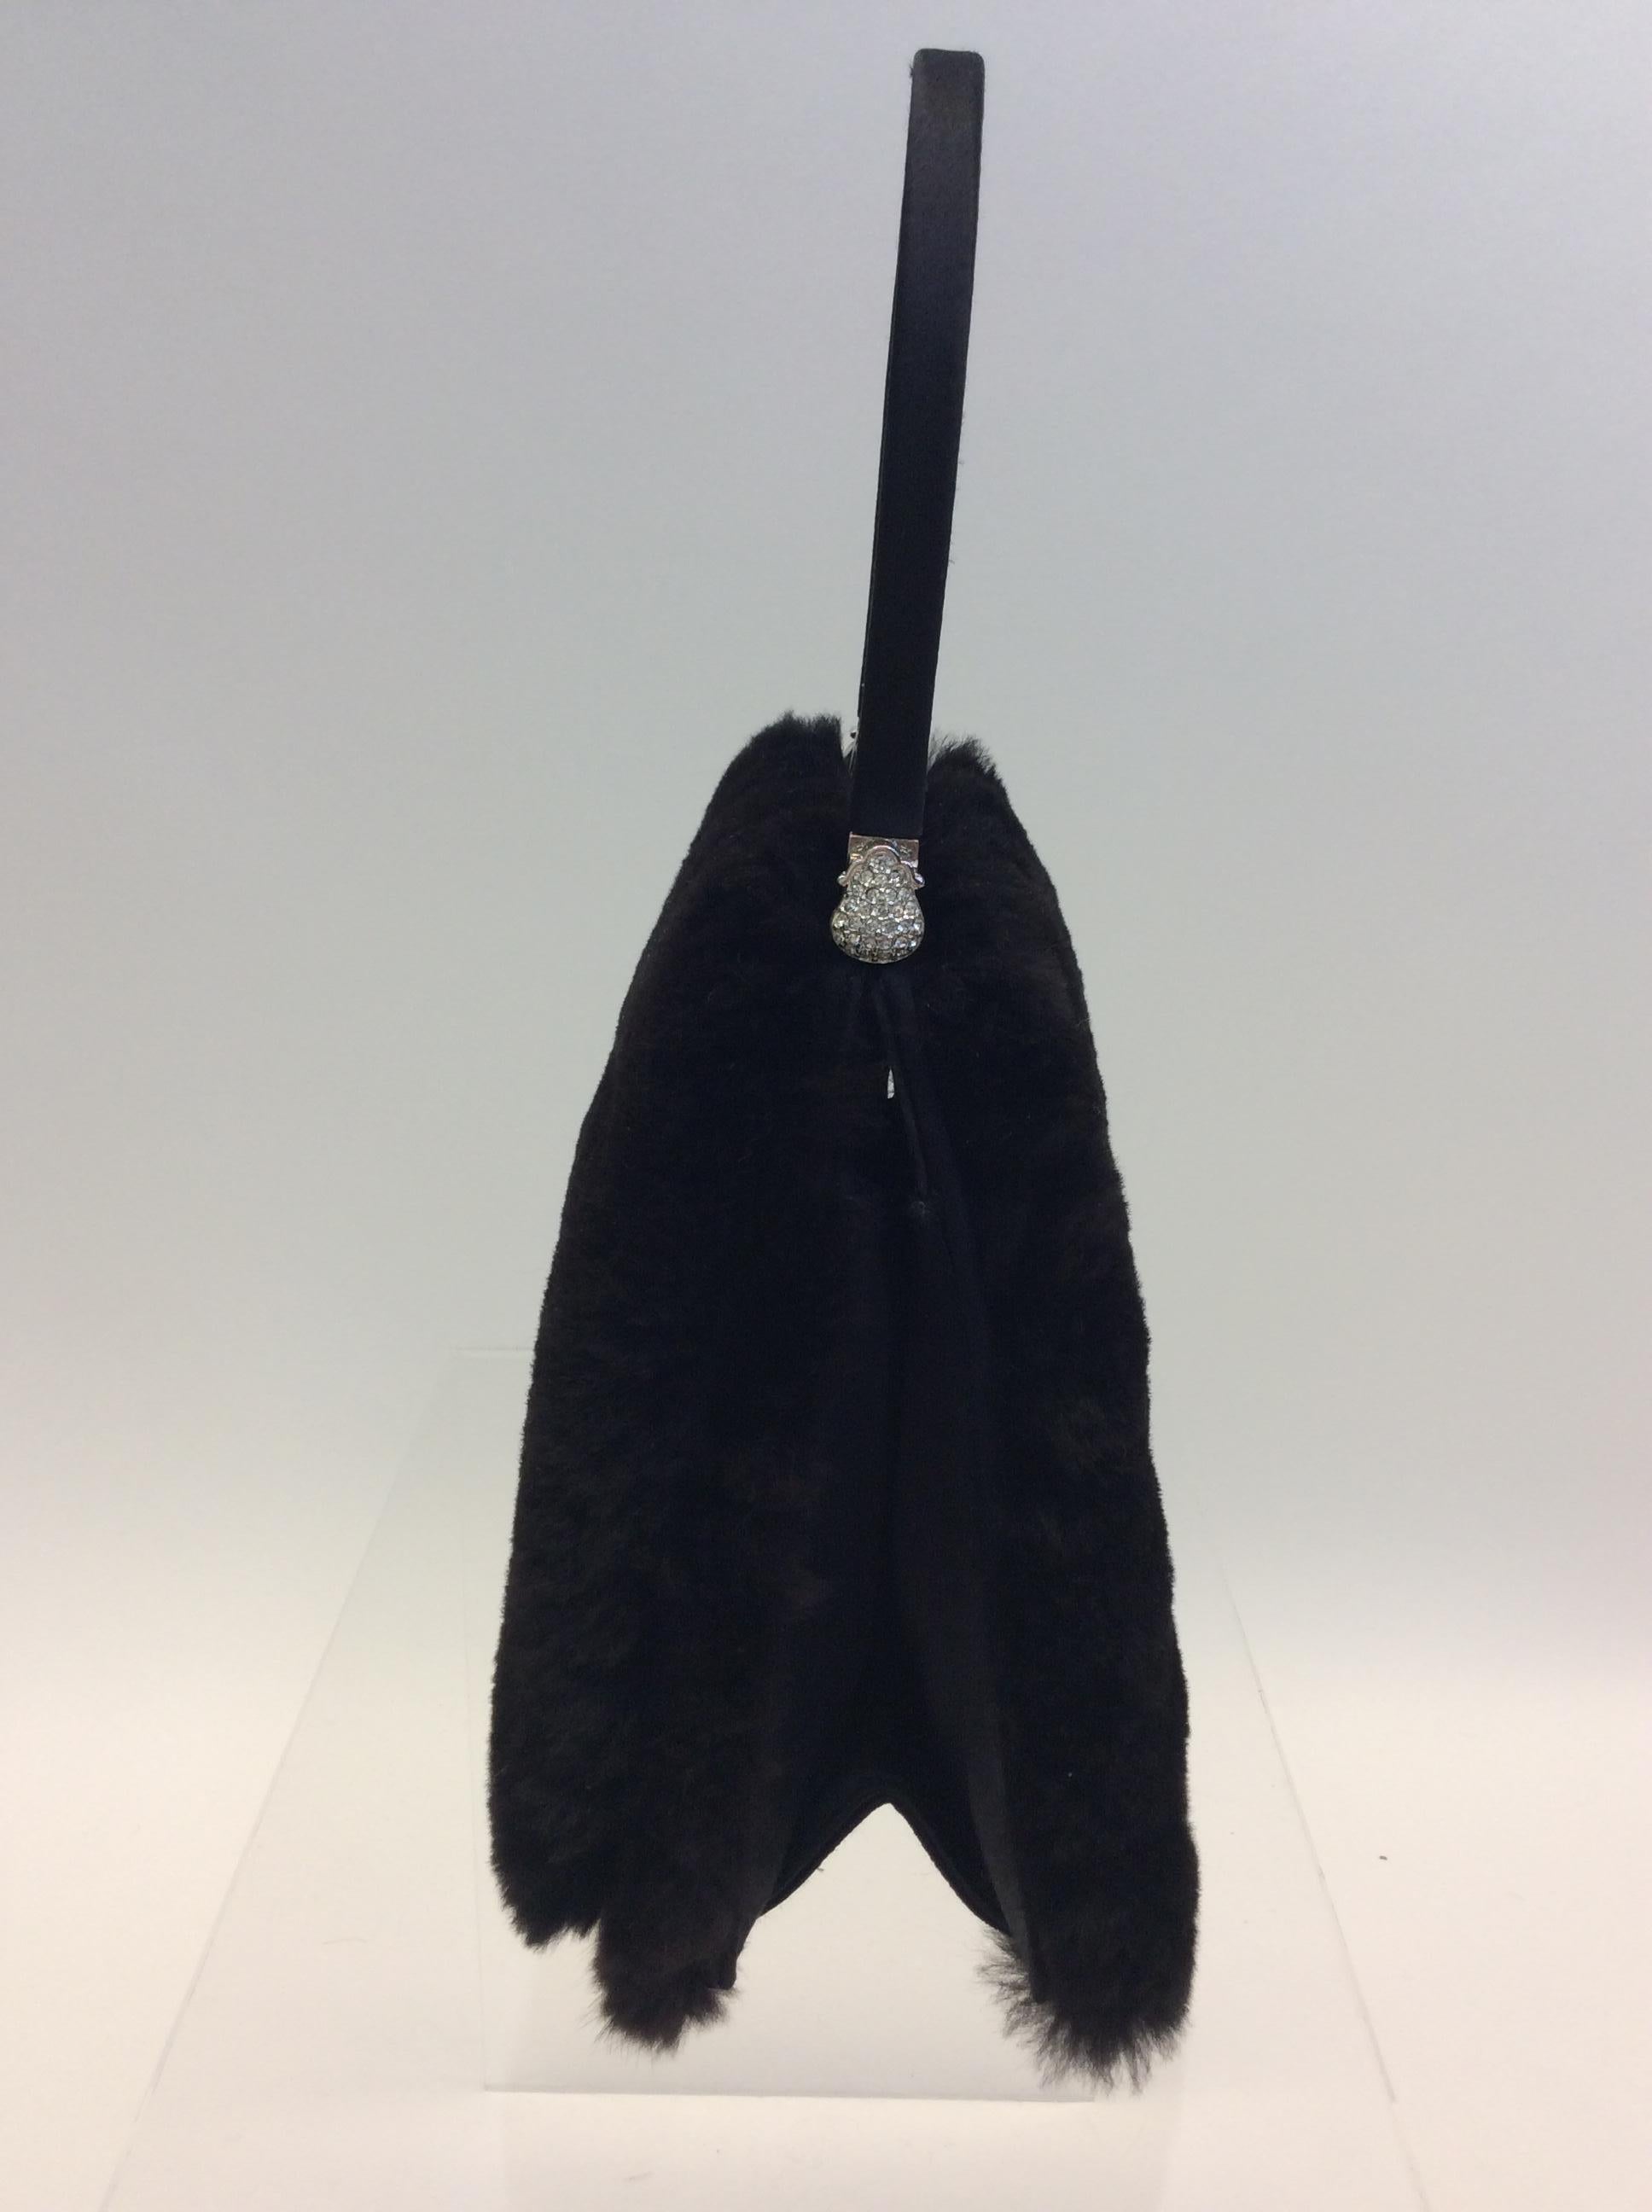 Judith Leiber Black Mink Handbag
$599
Rhinestone embellishment
5.5